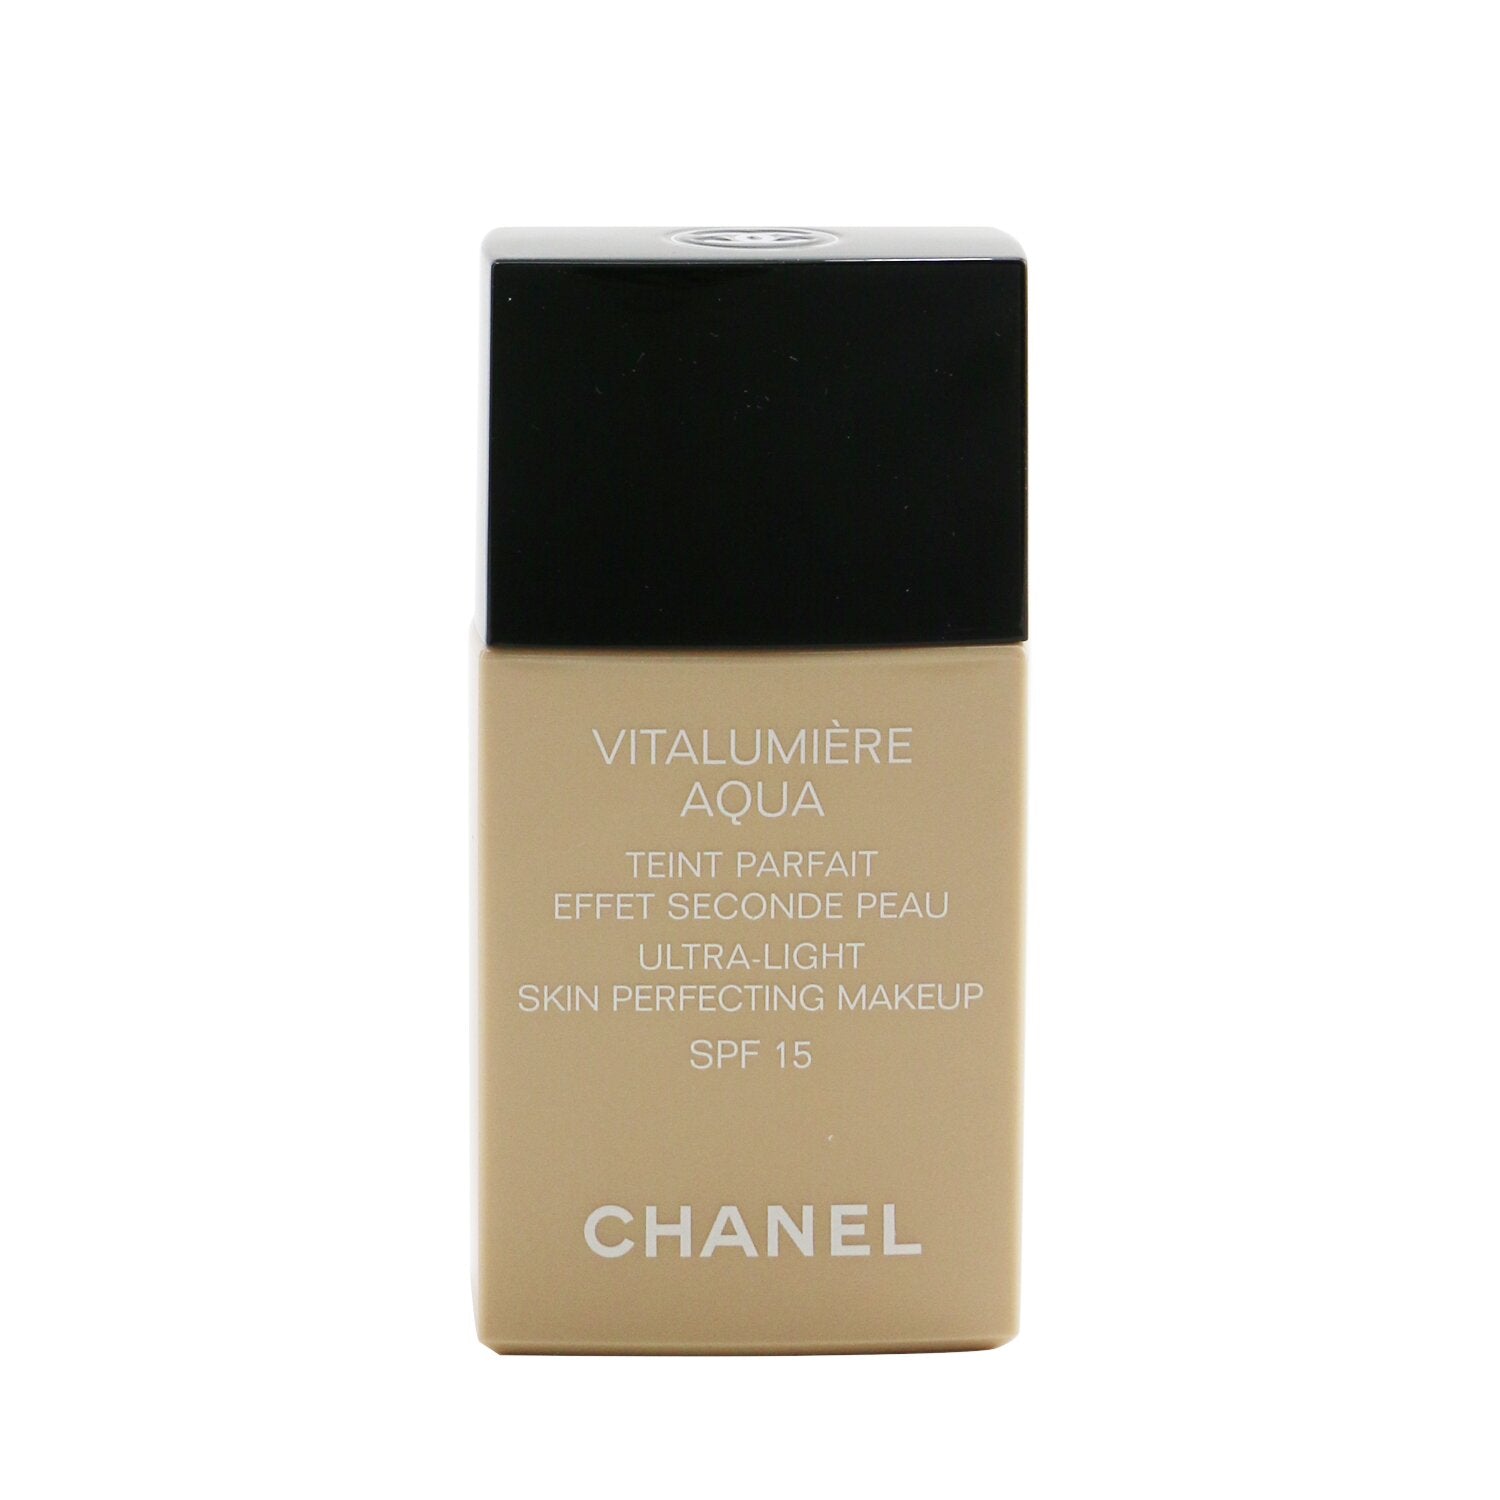 Caius Mesterskab klassekammerat Vitalumiere Aqua Ultra Light Skin Perfecting Make Up SFP 15 for Sale |  Chanel, Make Up, Buy Now – Author